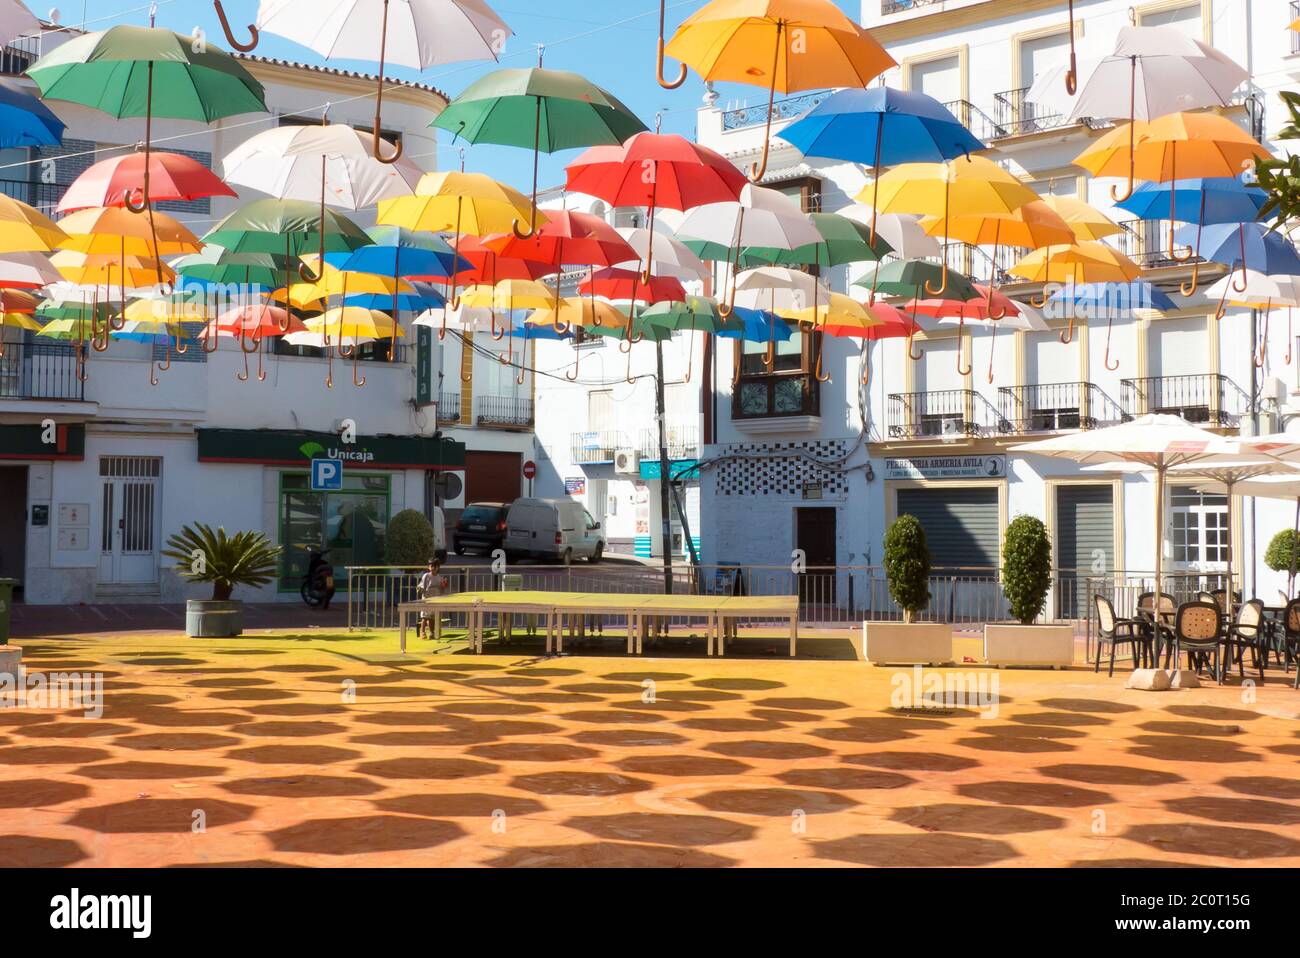 Andalucia in Spain: an art installation comprising colourful umbrellas in  the Plaza de la Constitución, Torrox Pueblo Stock Photo - Alamy